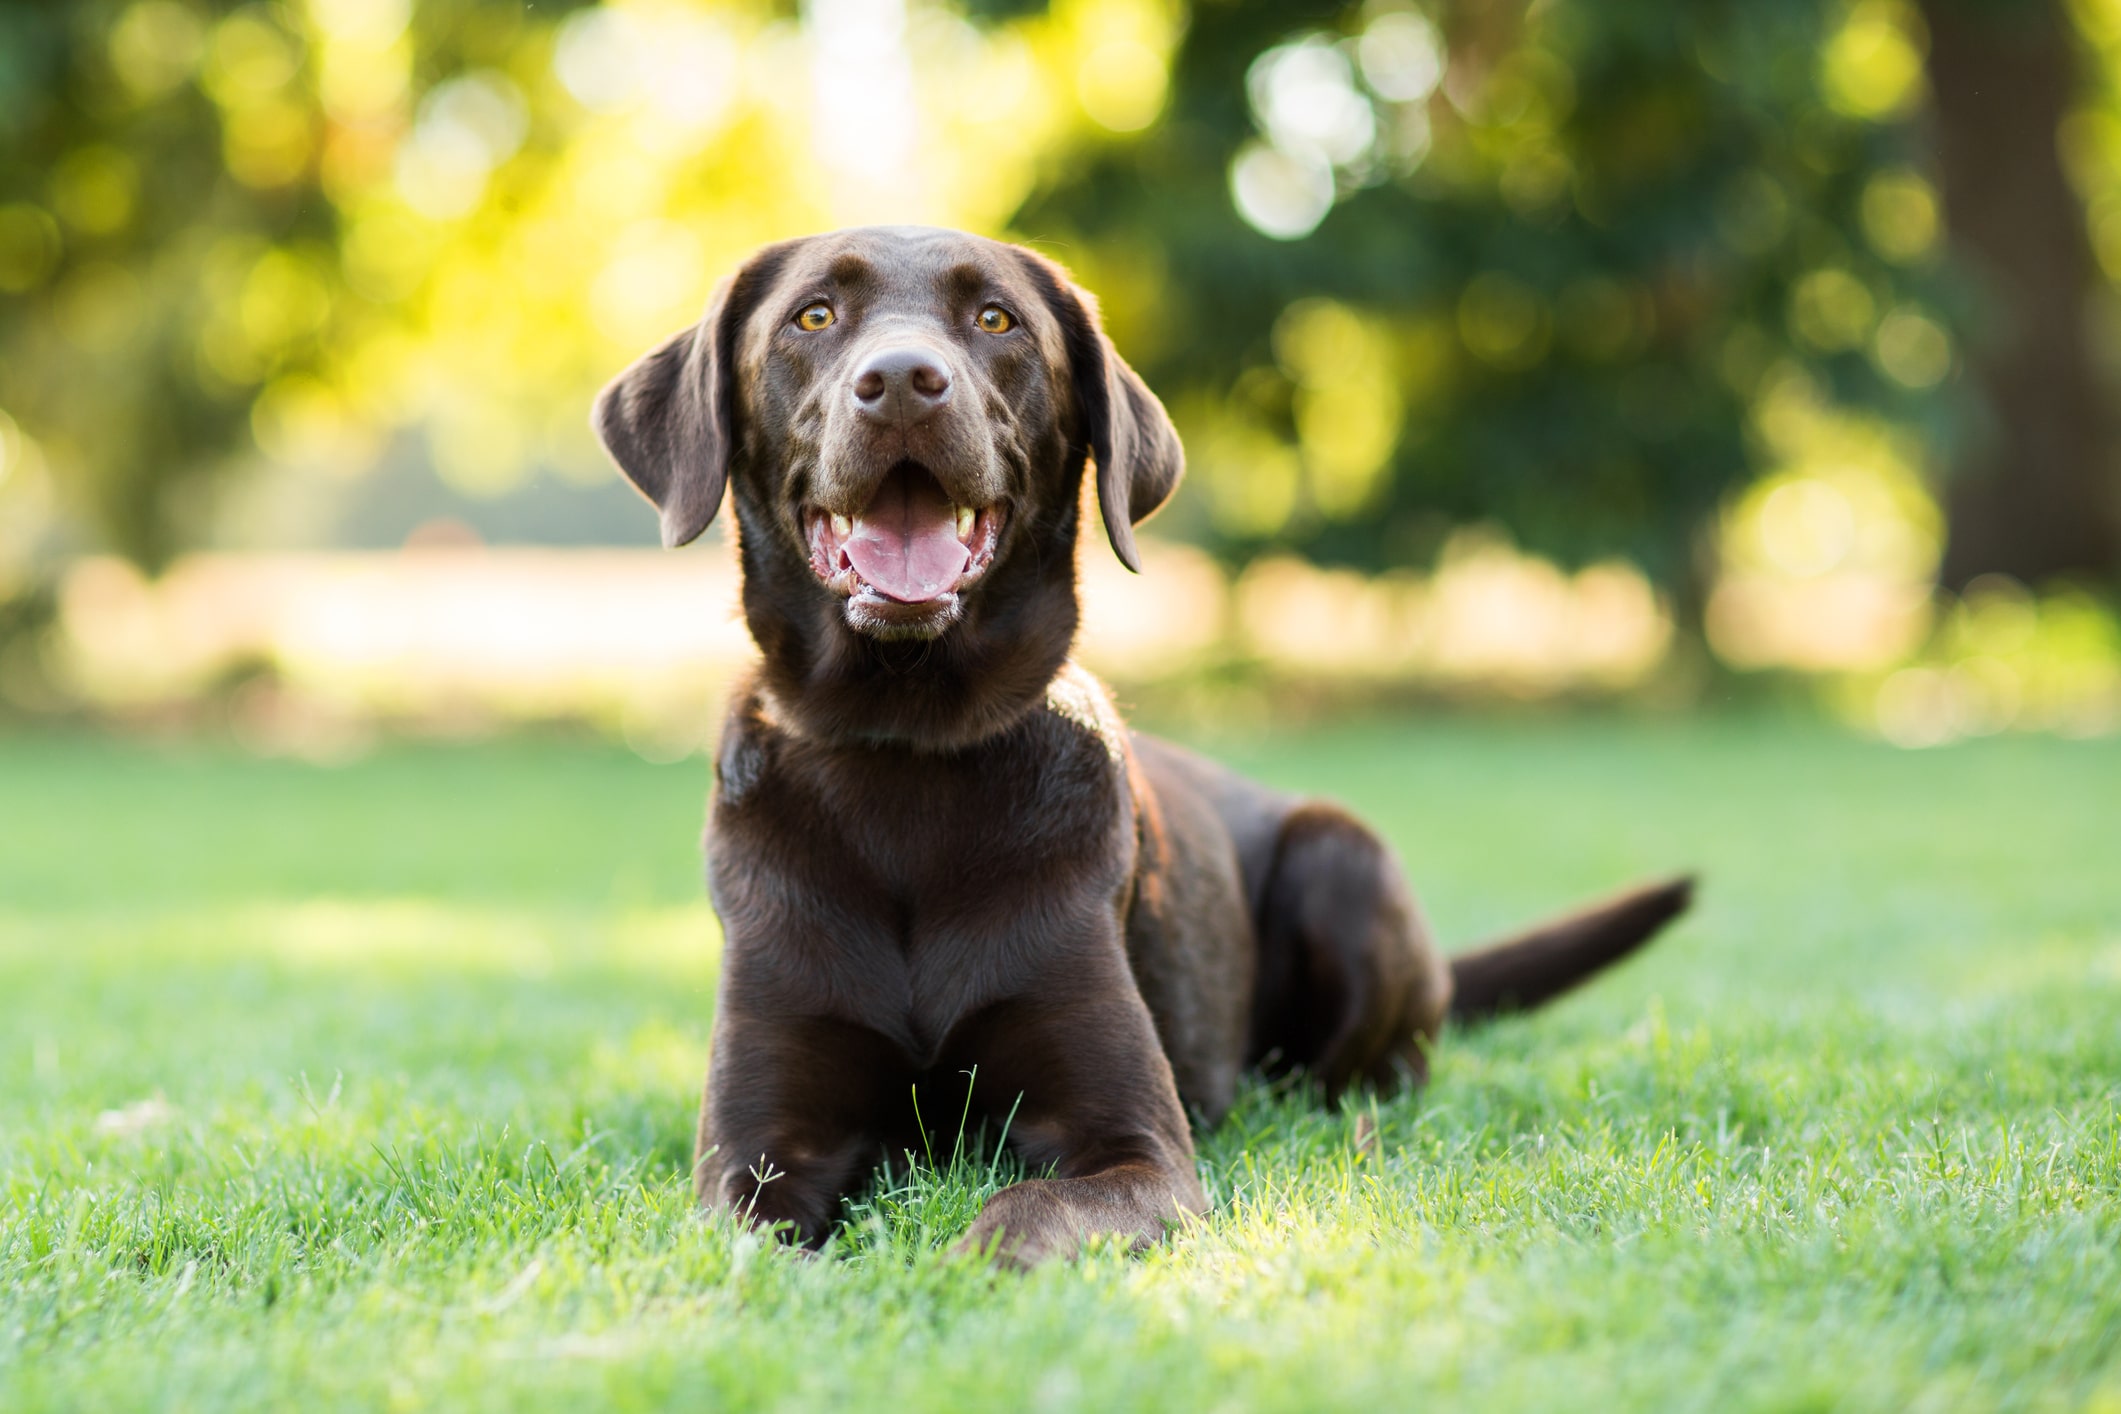 Chocolate Labrador Dog Laying on Grass Outdoors